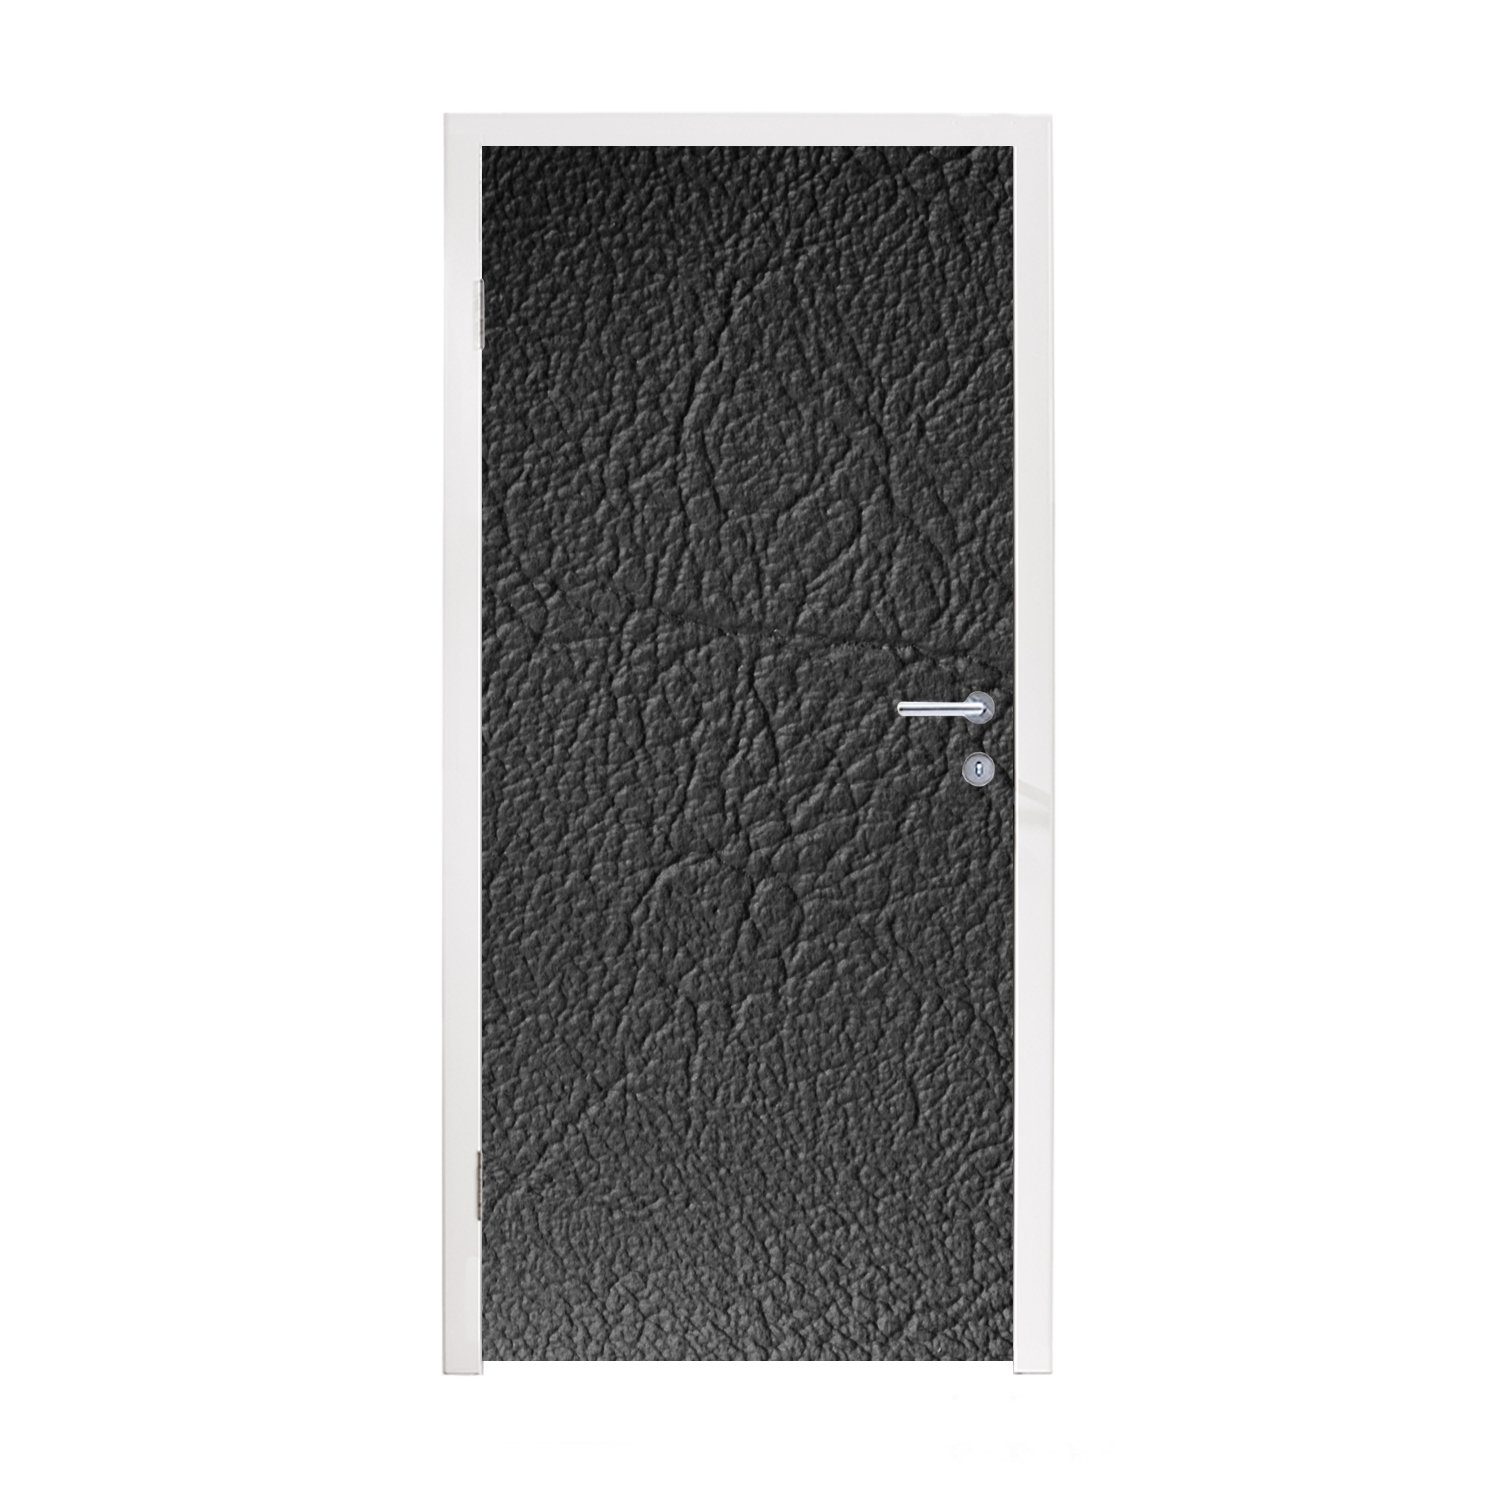 MuchoWow Türtapete Leder - Lederoptik - Industriell - Schwarz, Matt, bedruckt, (1 St), Fototapete für Tür, Türaufkleber, 75x205 cm